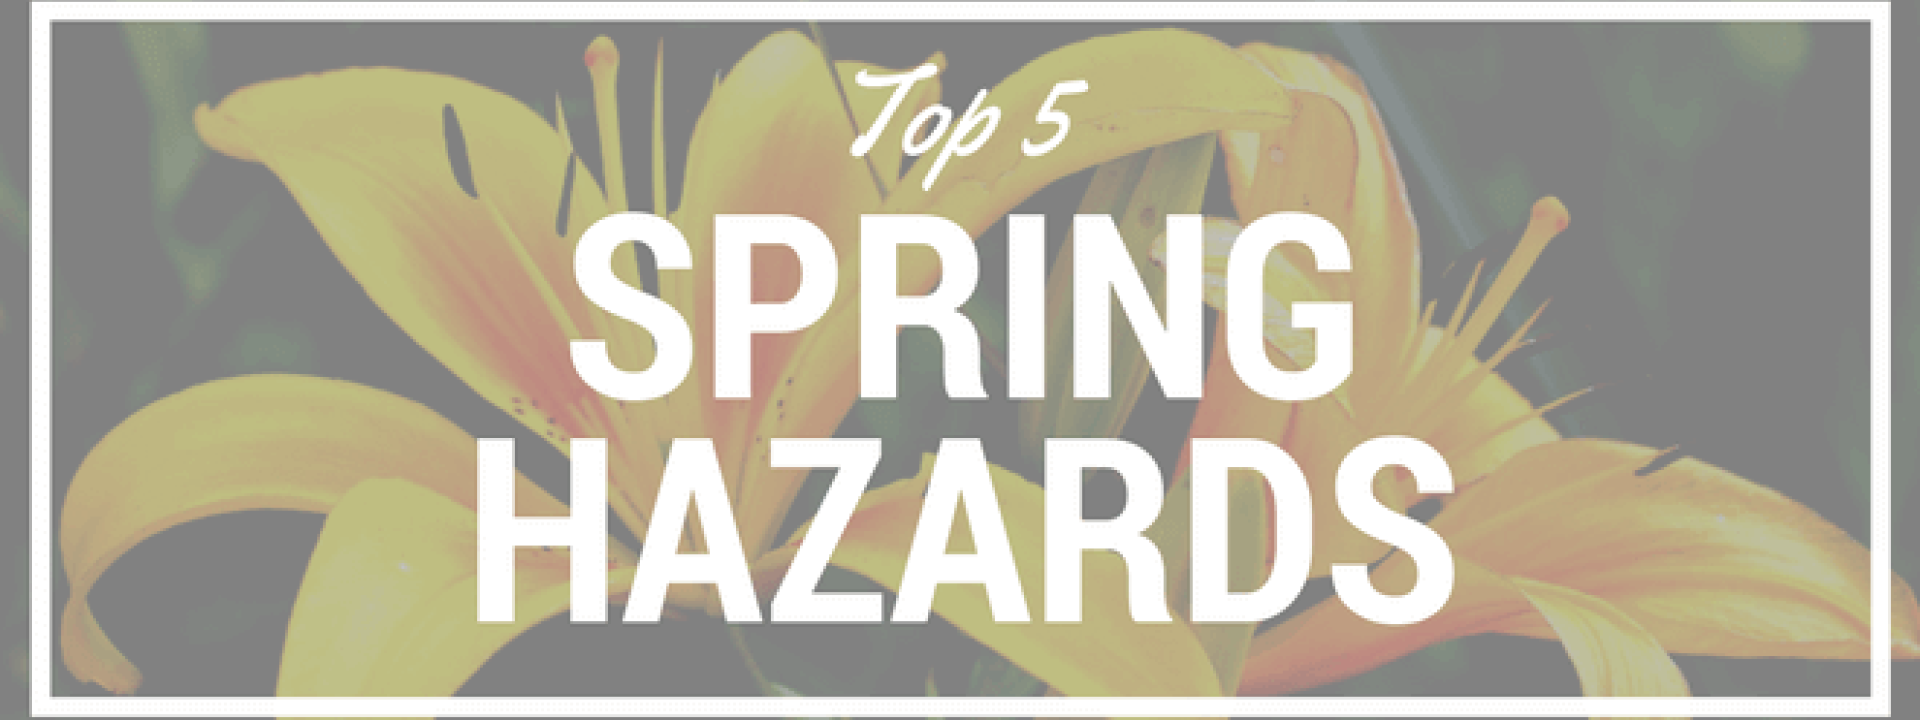 blog-title-top-5-spring-hazards.png